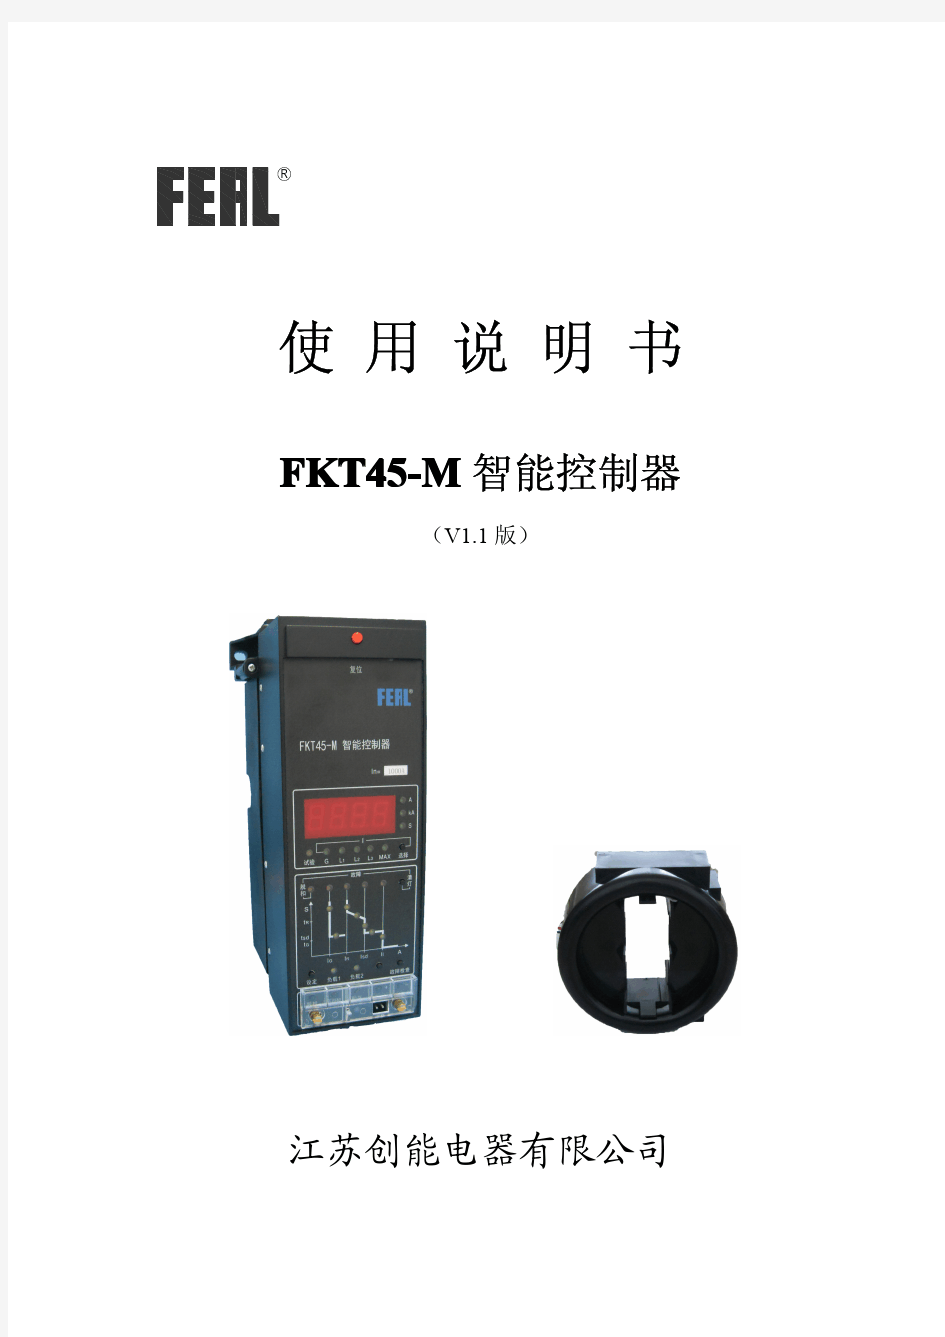 FKT45-M智能控制器使用说明书